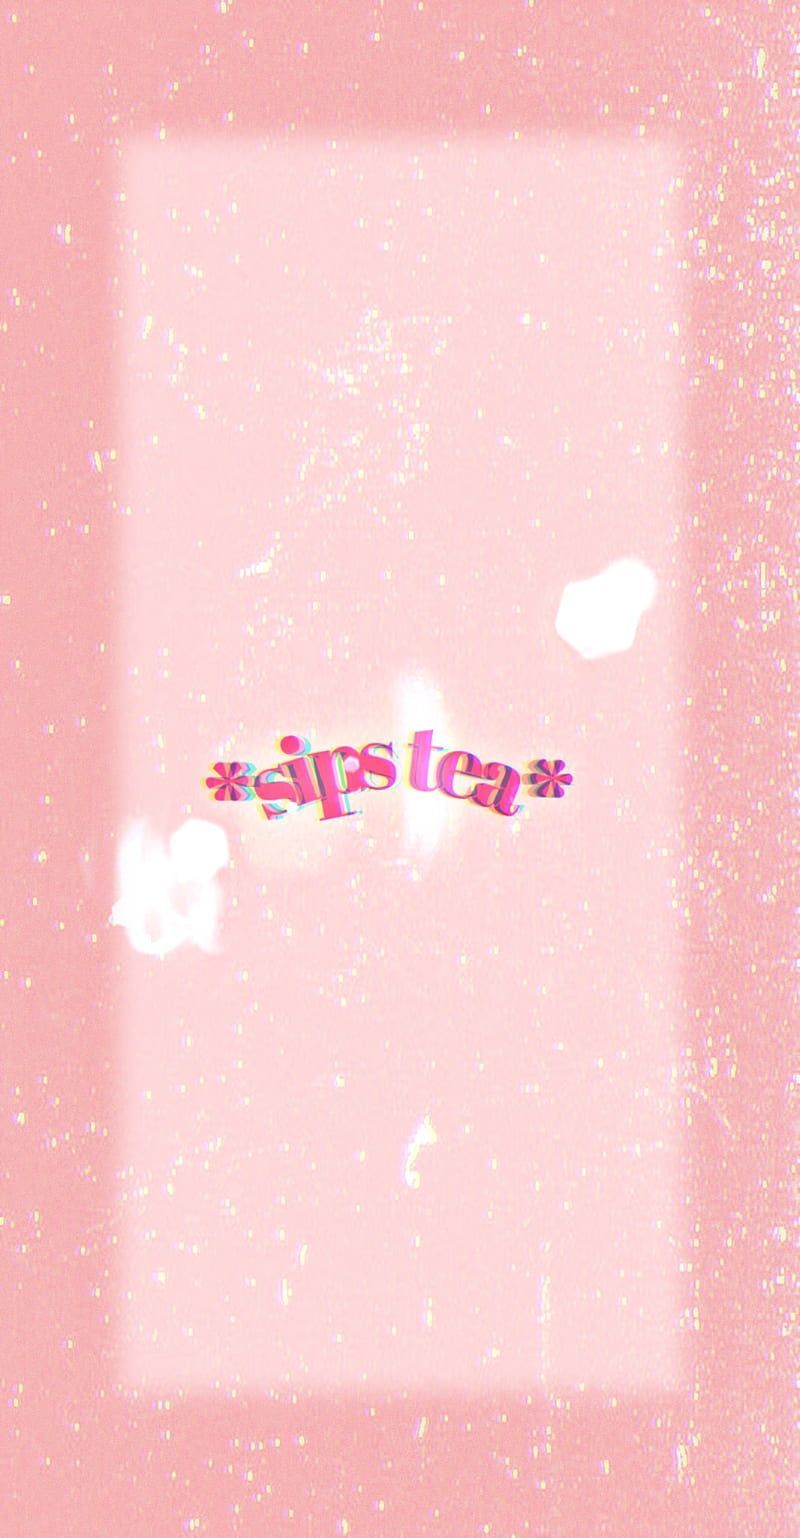 Sips tea, aestetic, aesthetic, cute, modern, pink, HD phone wallpaper